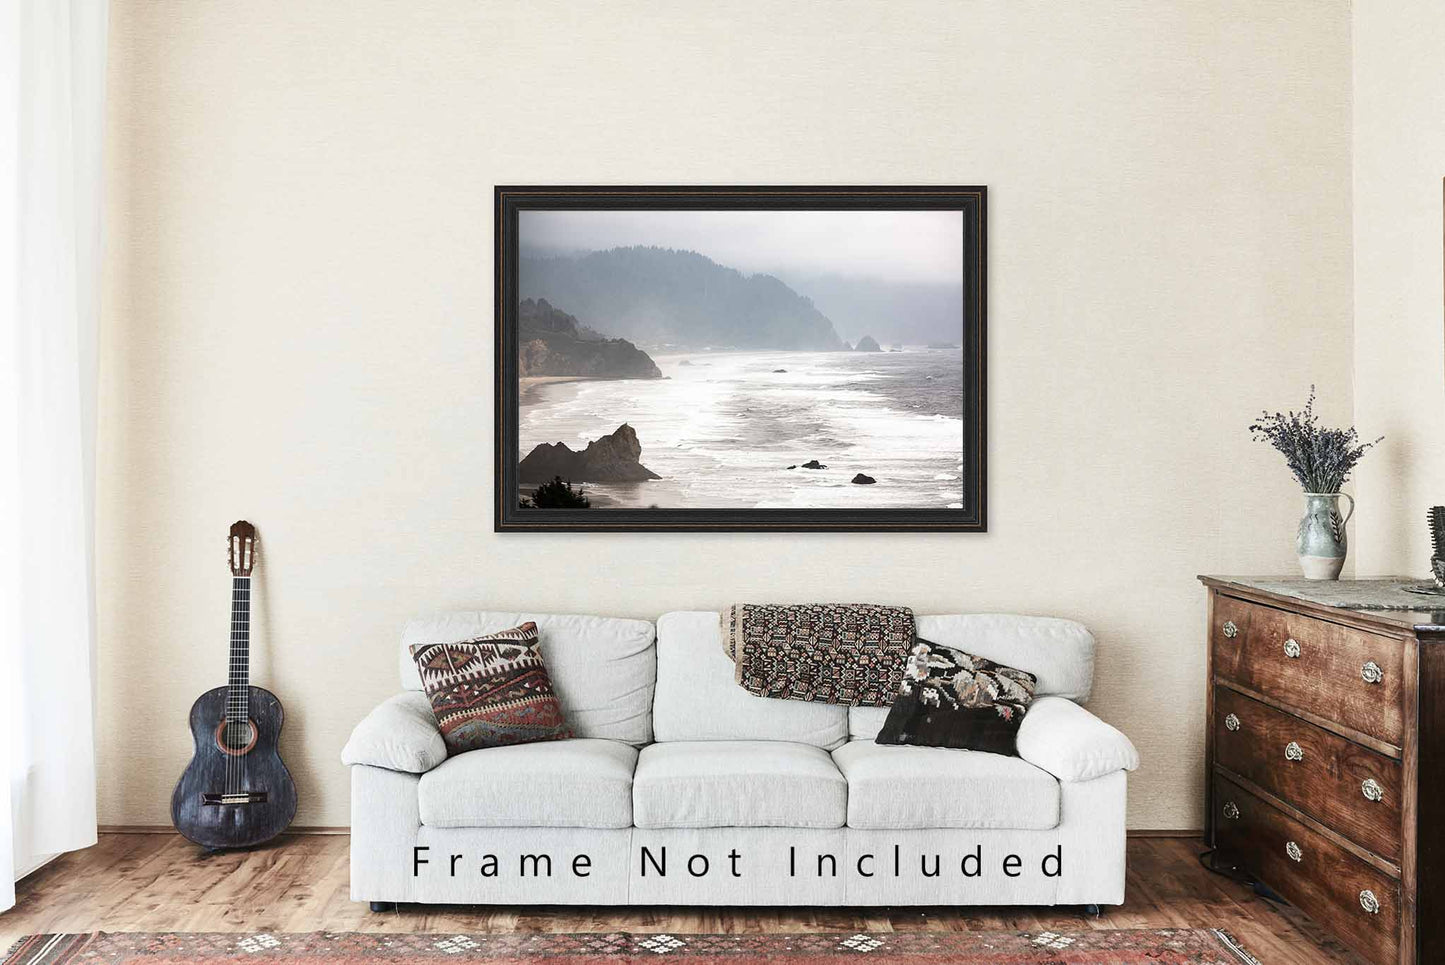 Pacific Northwest Photography Print - Picture of Waves Crashing on Beach in Fog Along Oregon Coast - Coastal Wall Art Photo Artwork Decor